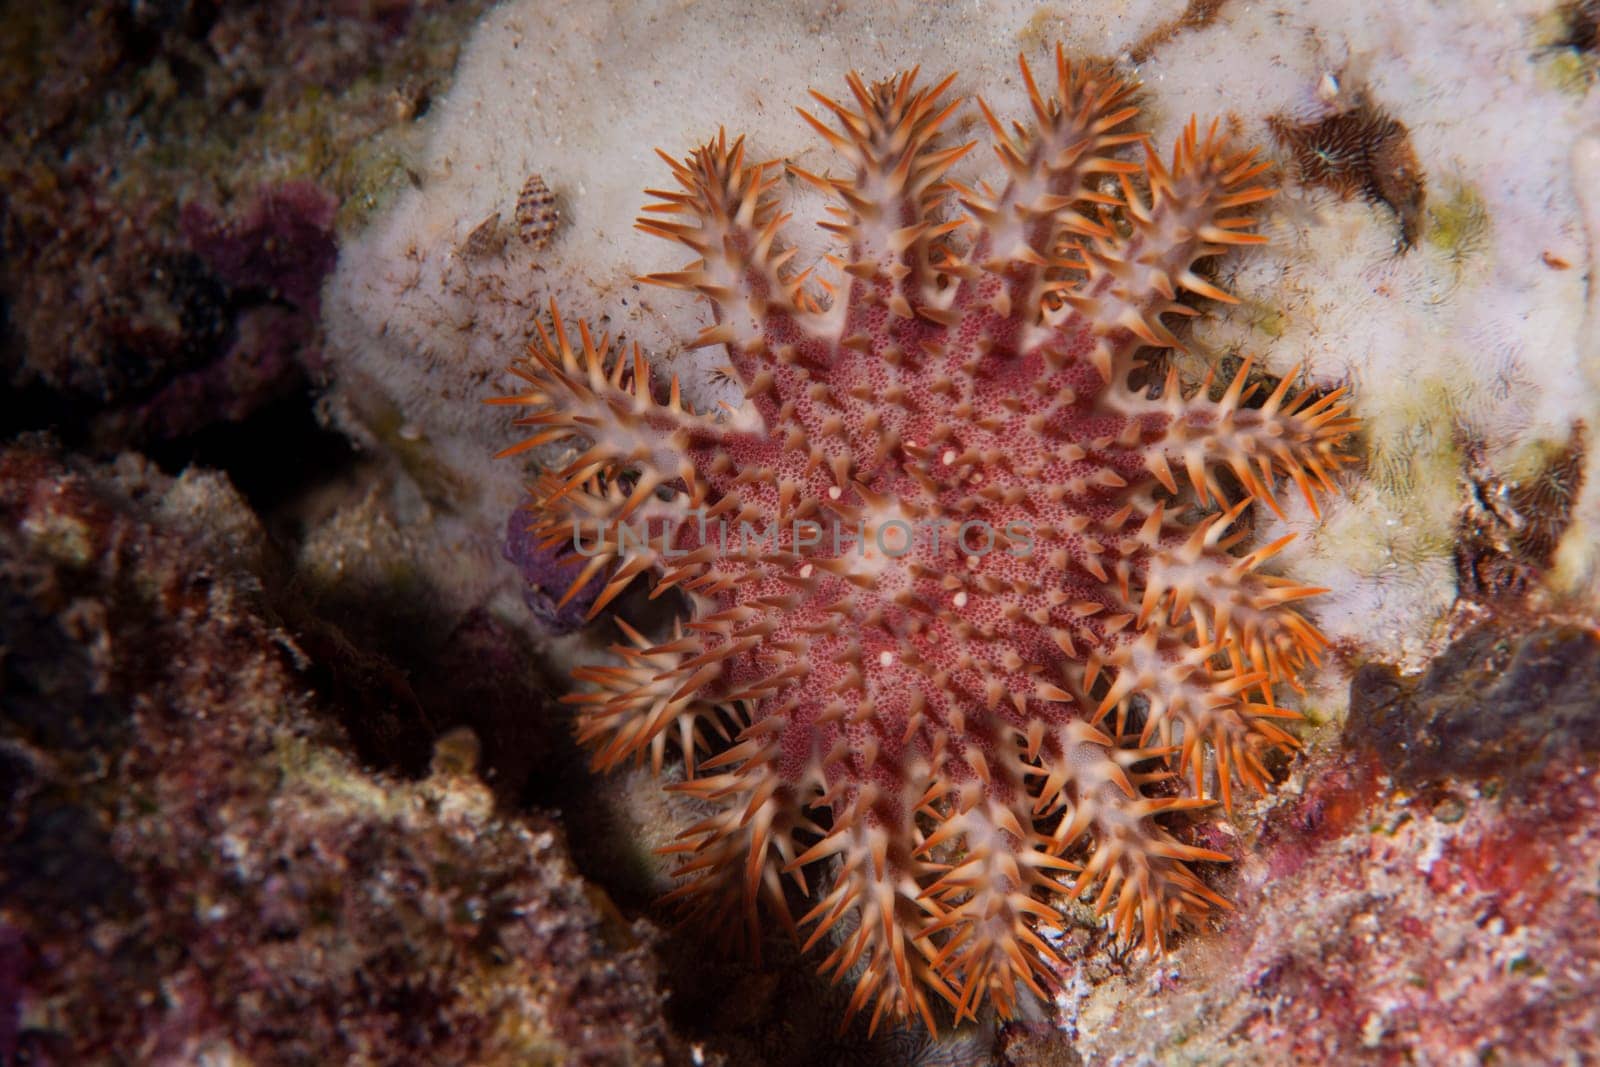 Sea star crown of thorns in Baja California